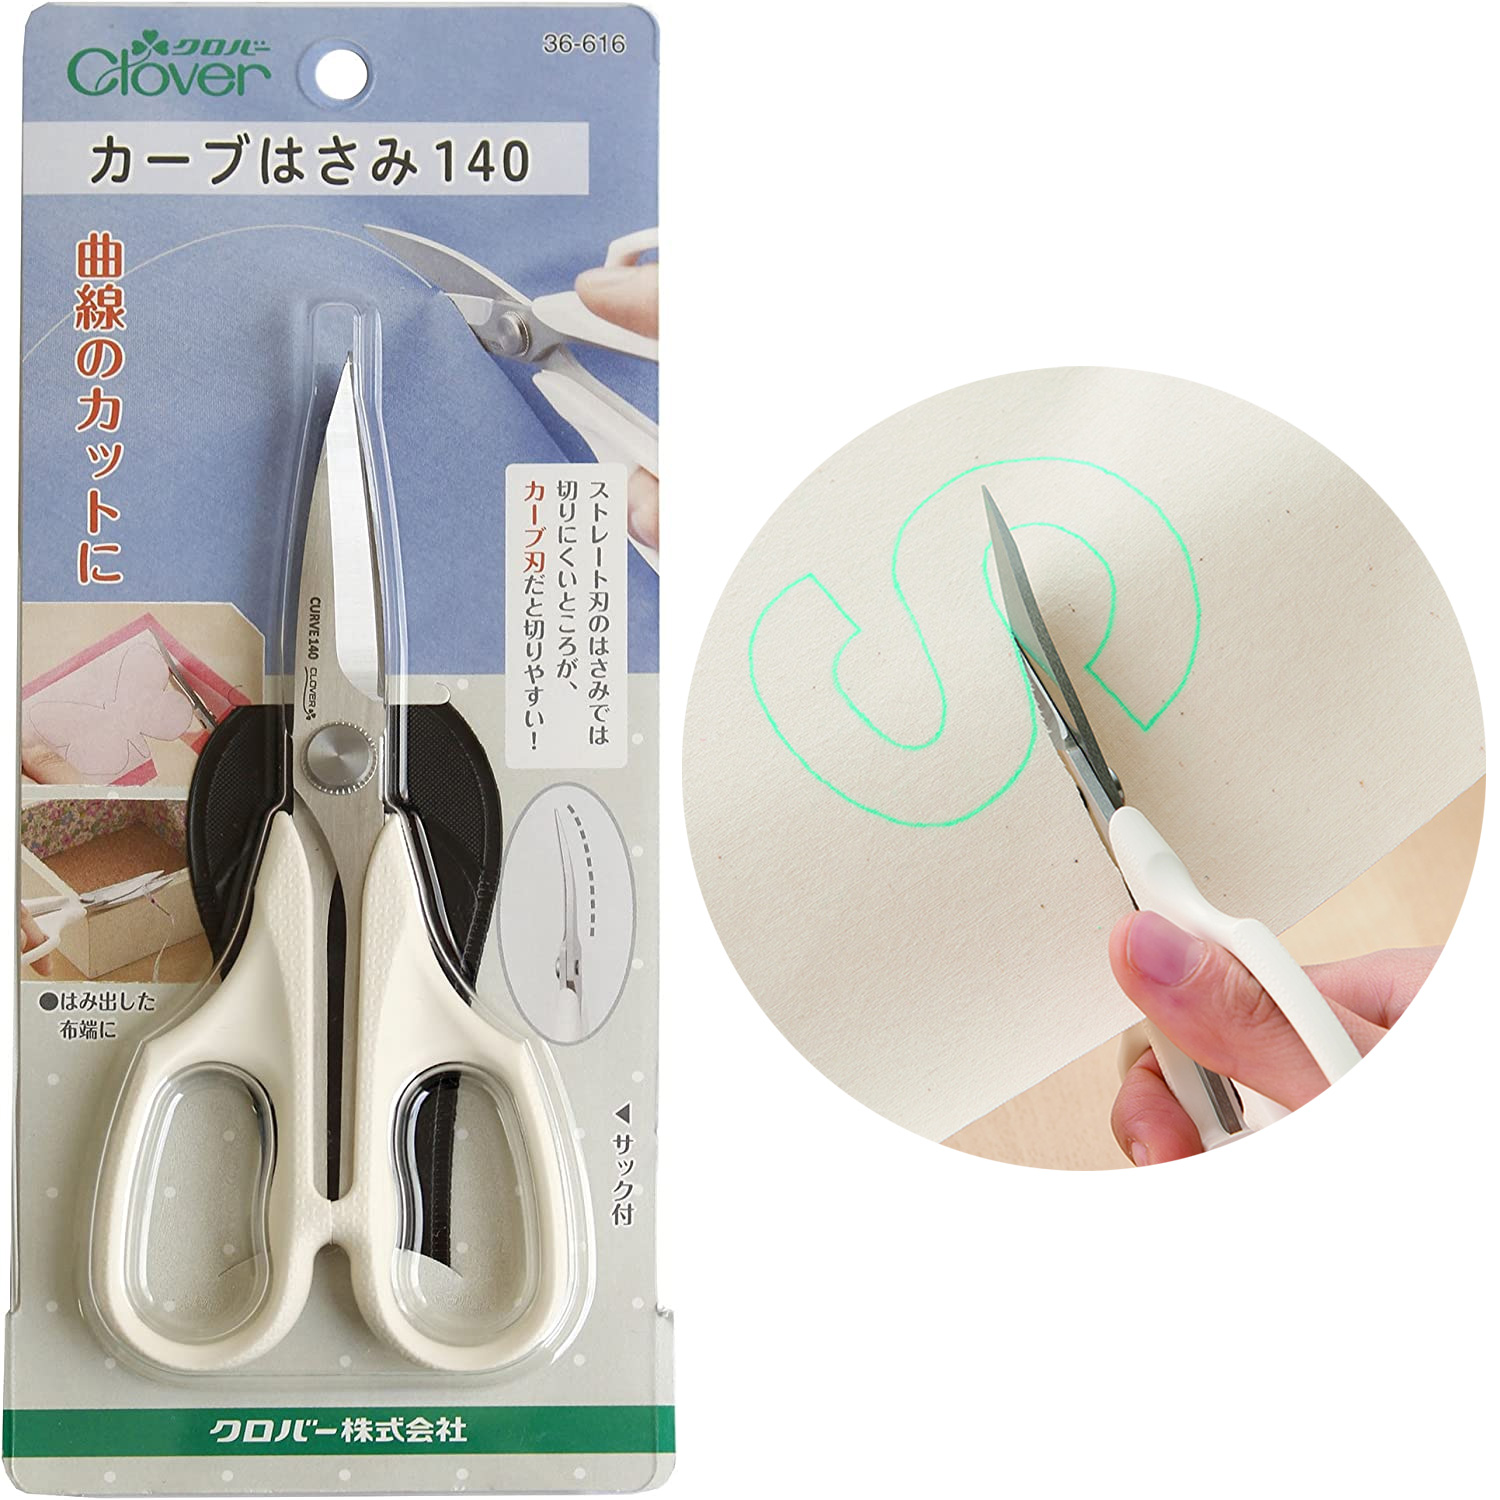 CL36-616 Curved Scissors 140 (pcs)